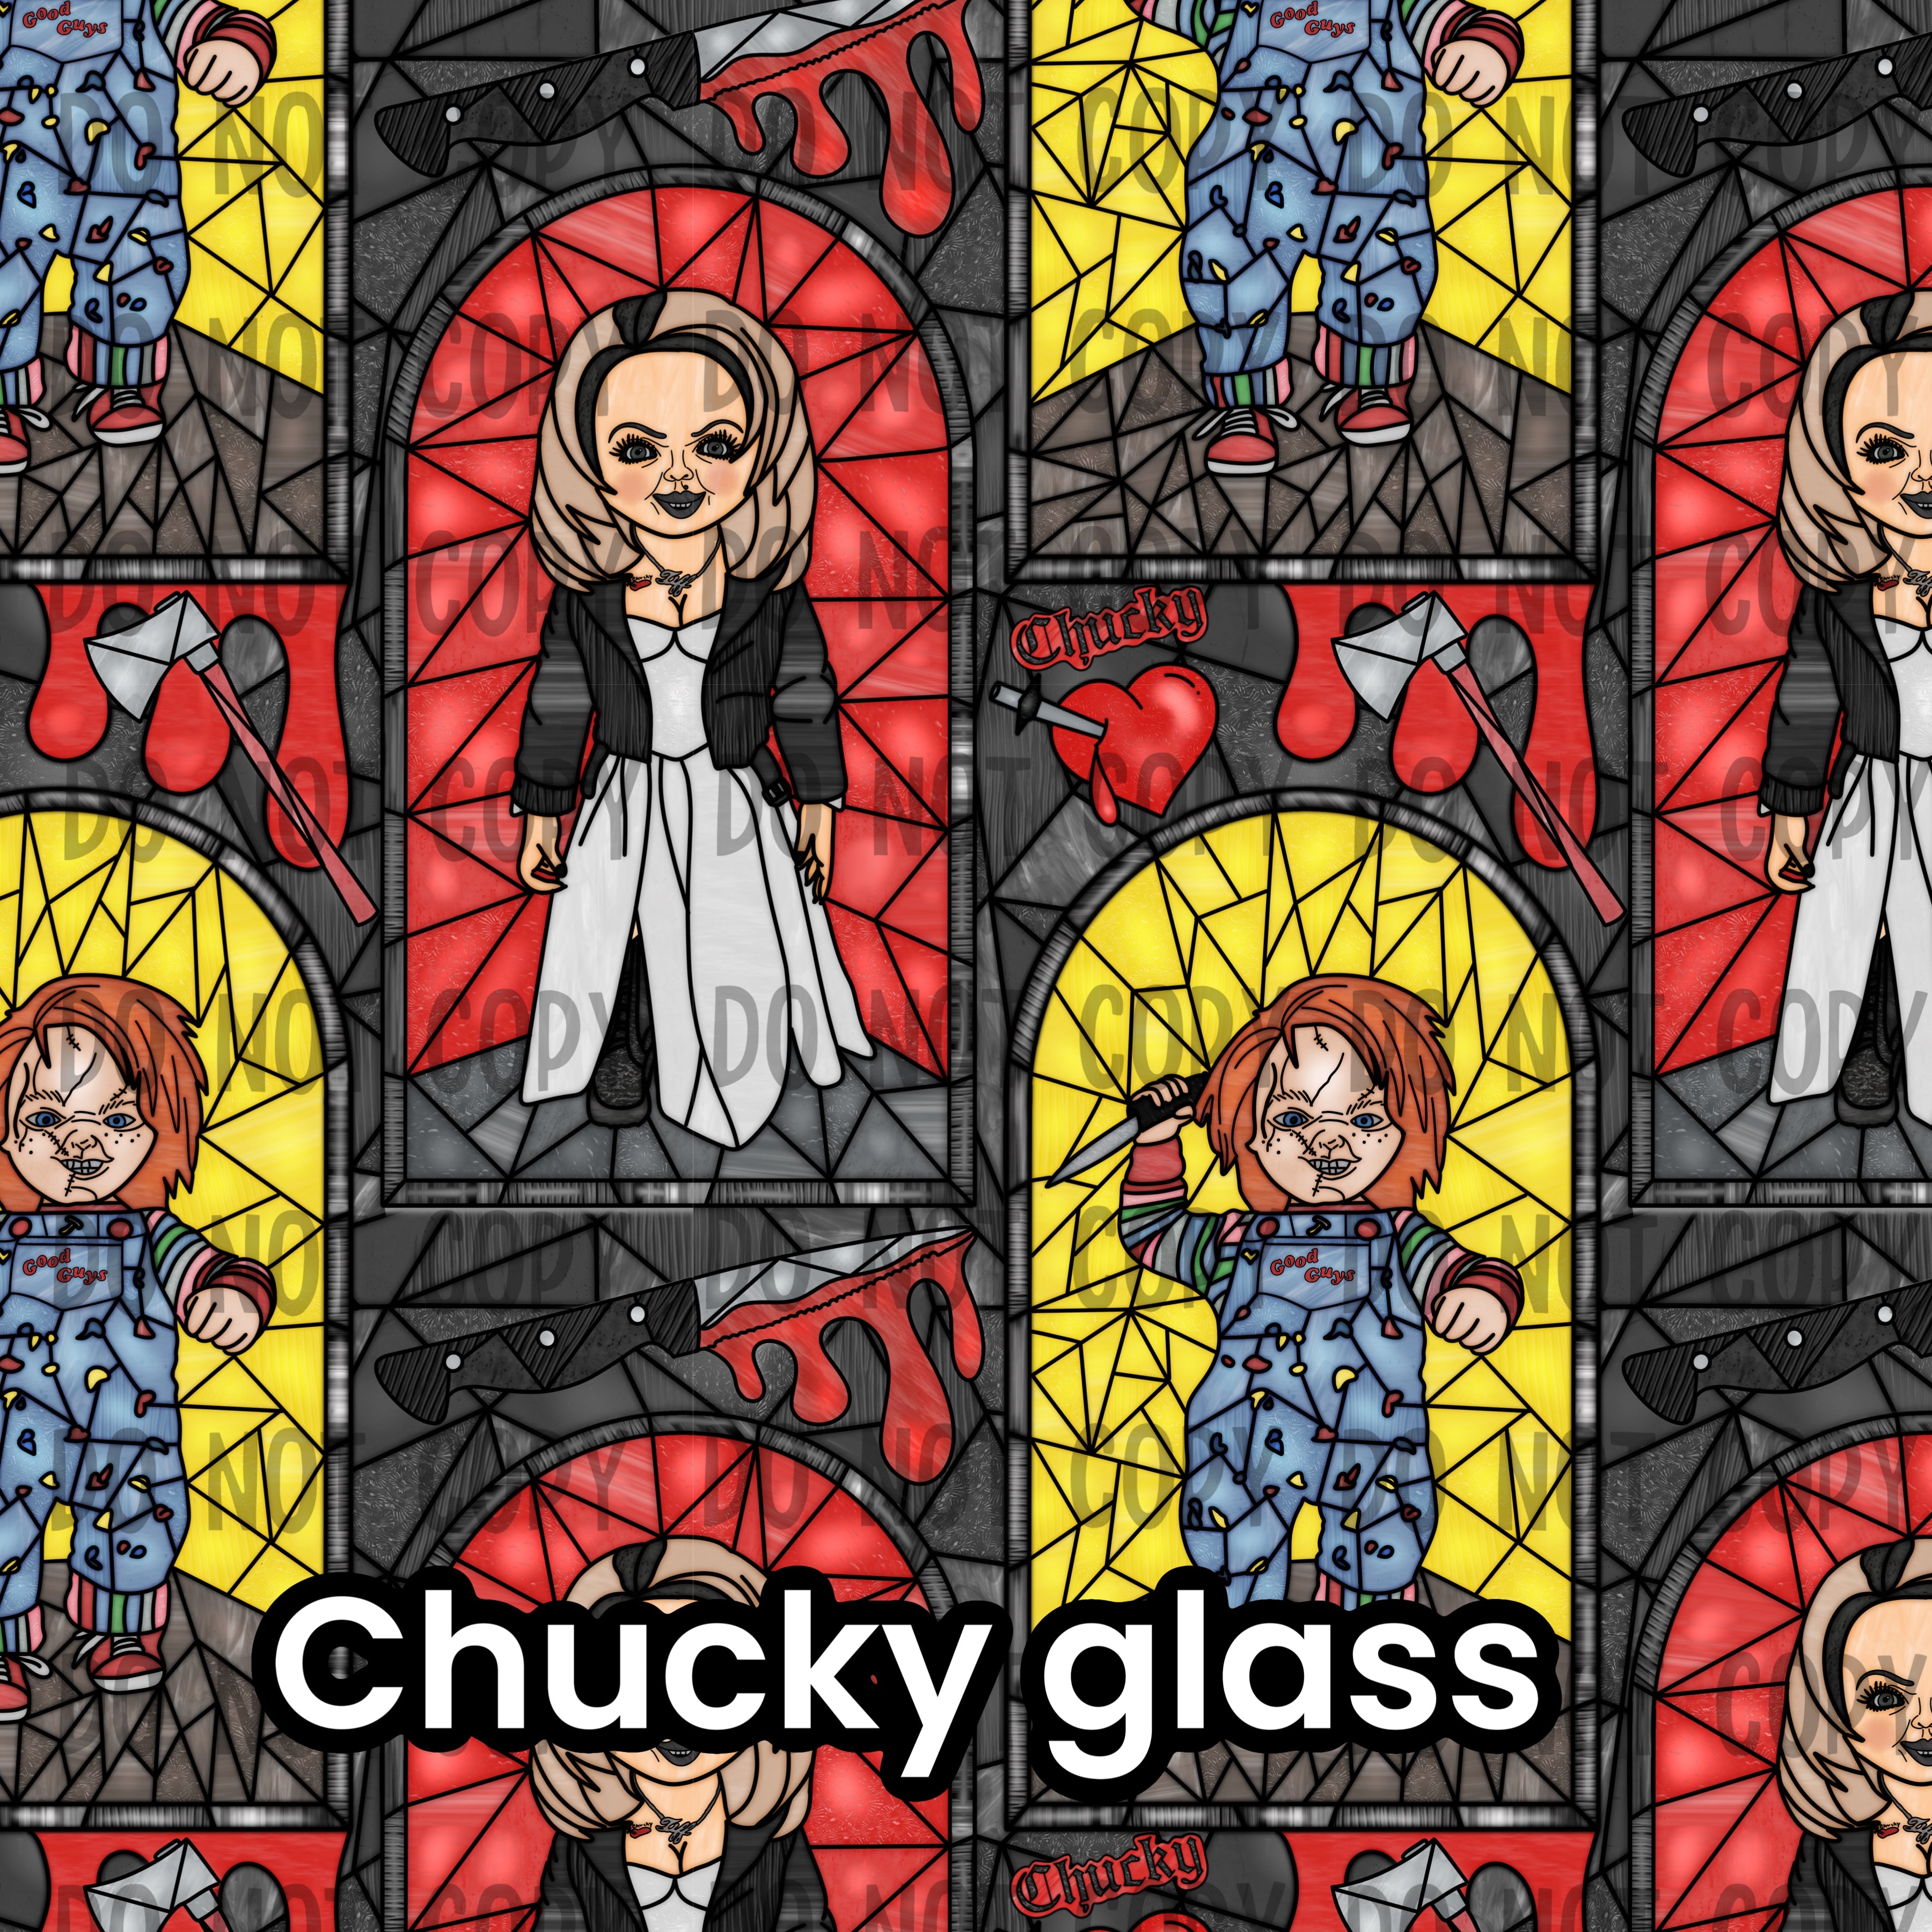 Chucky glass